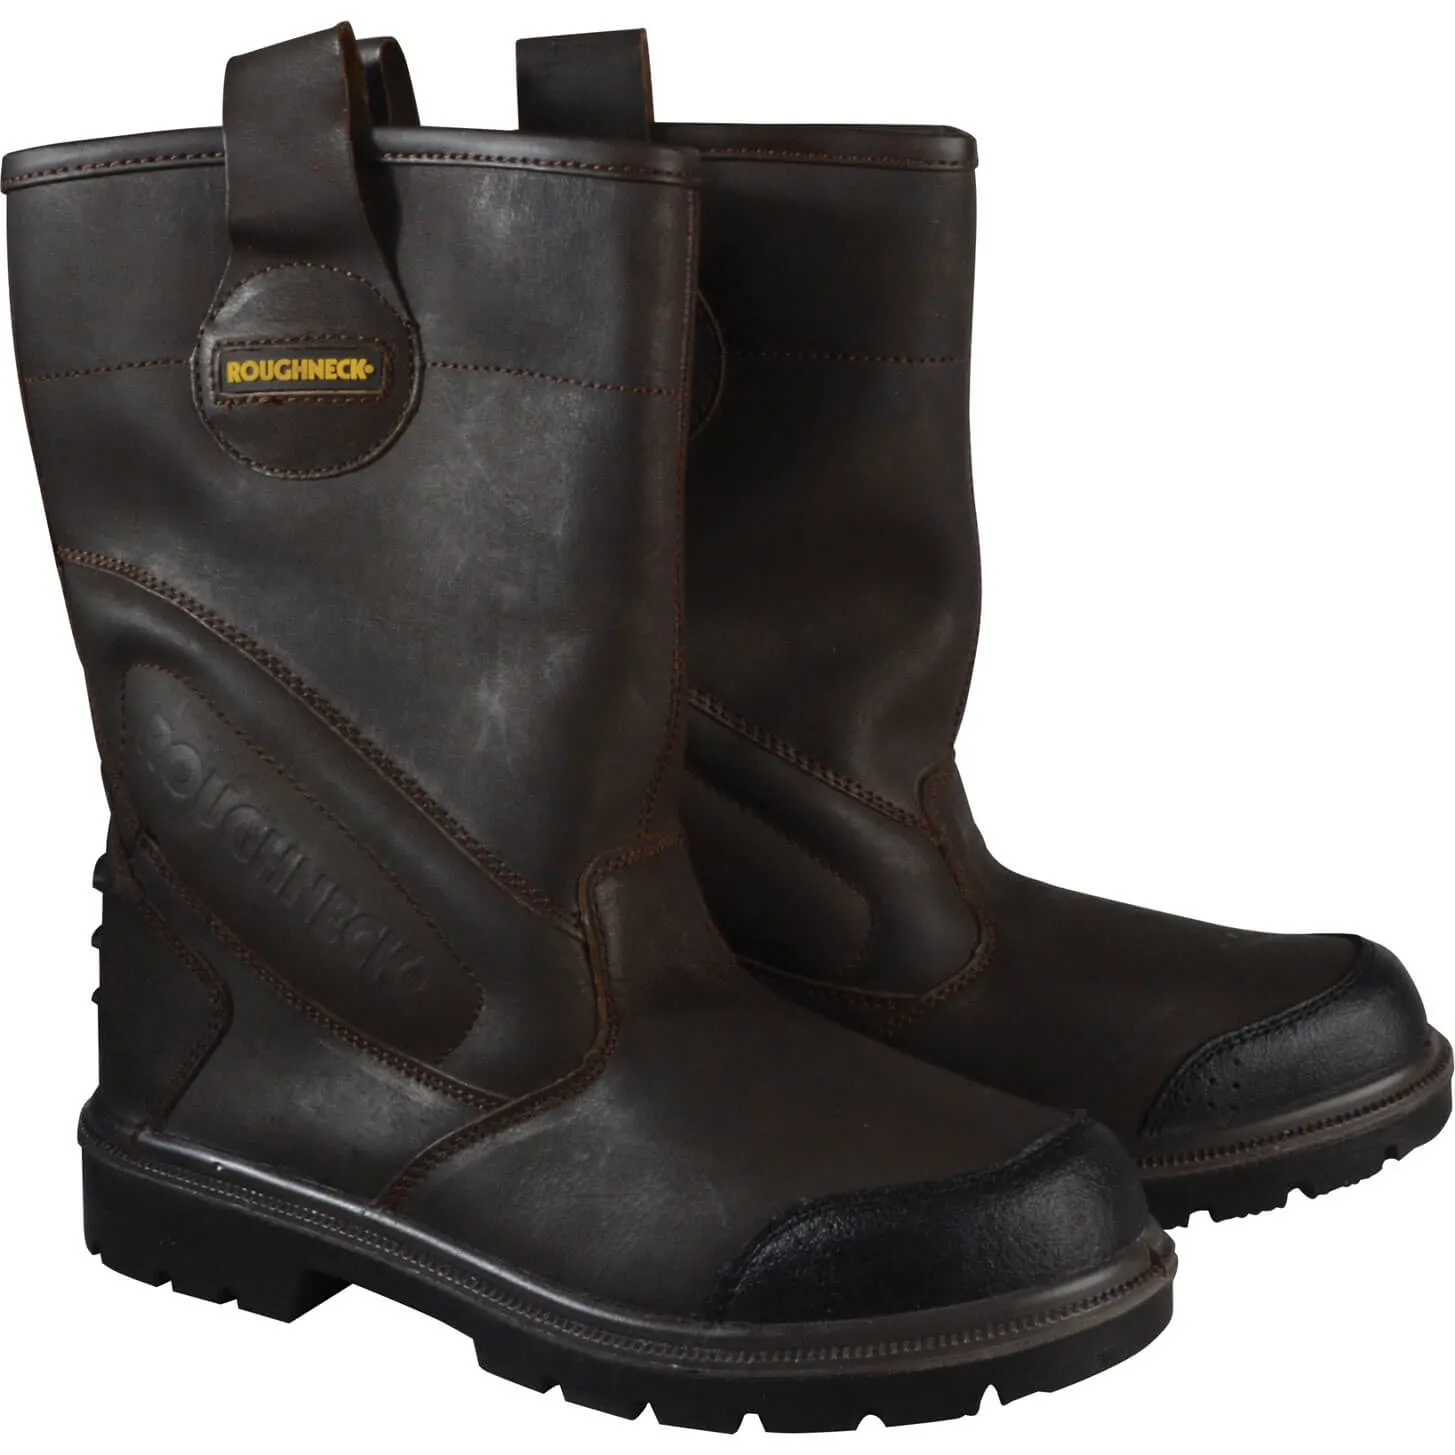 Roughneck Mens Hurricane Rigger Safety Boots - Dark Brown, Size 7